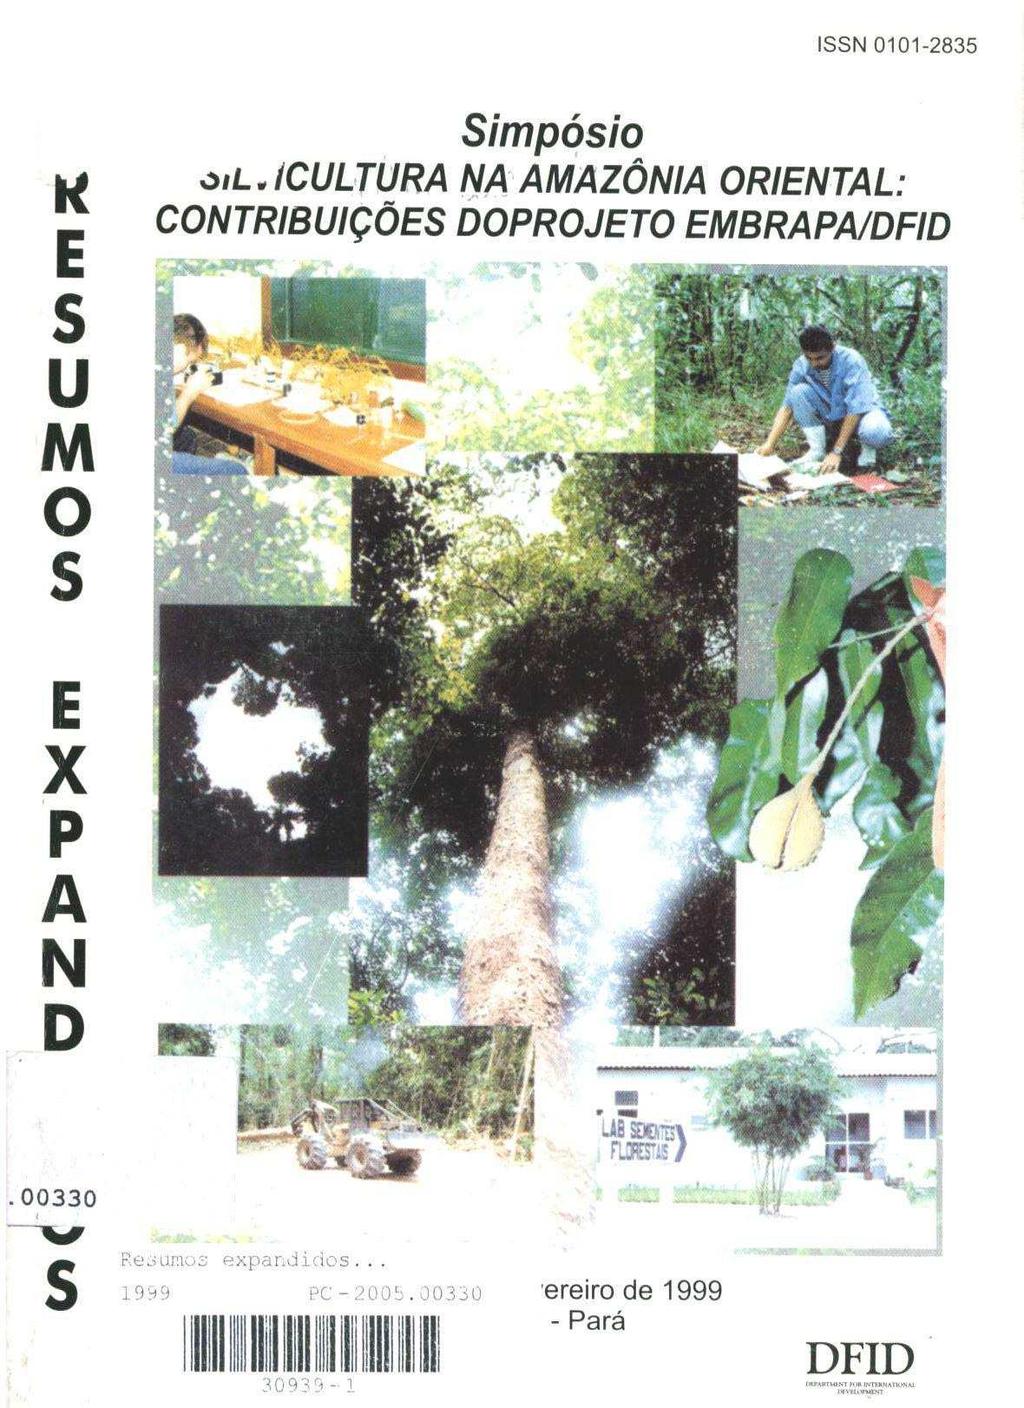 J.1 ISSN 0101-2835 E s u m s Simpósi slicultura NA AMAZÔNIA ORIENTAL: CONTRIBUIÇÕES DOPROJETO